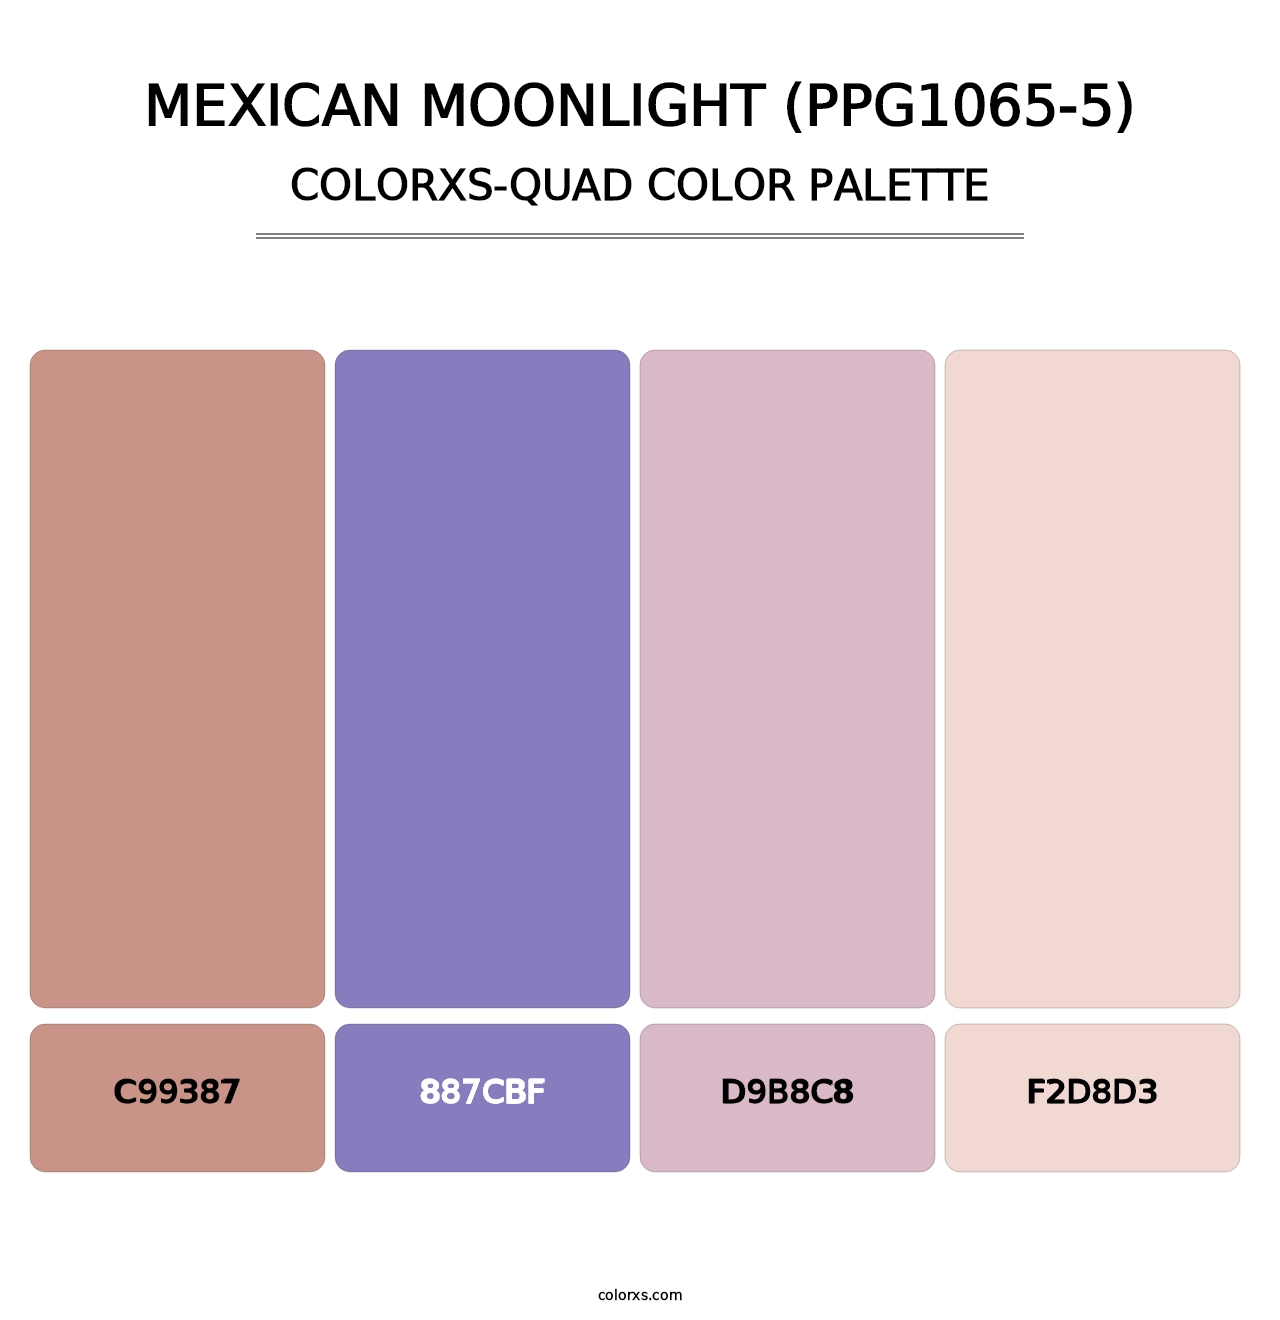 Mexican Moonlight (PPG1065-5) - Colorxs Quad Palette